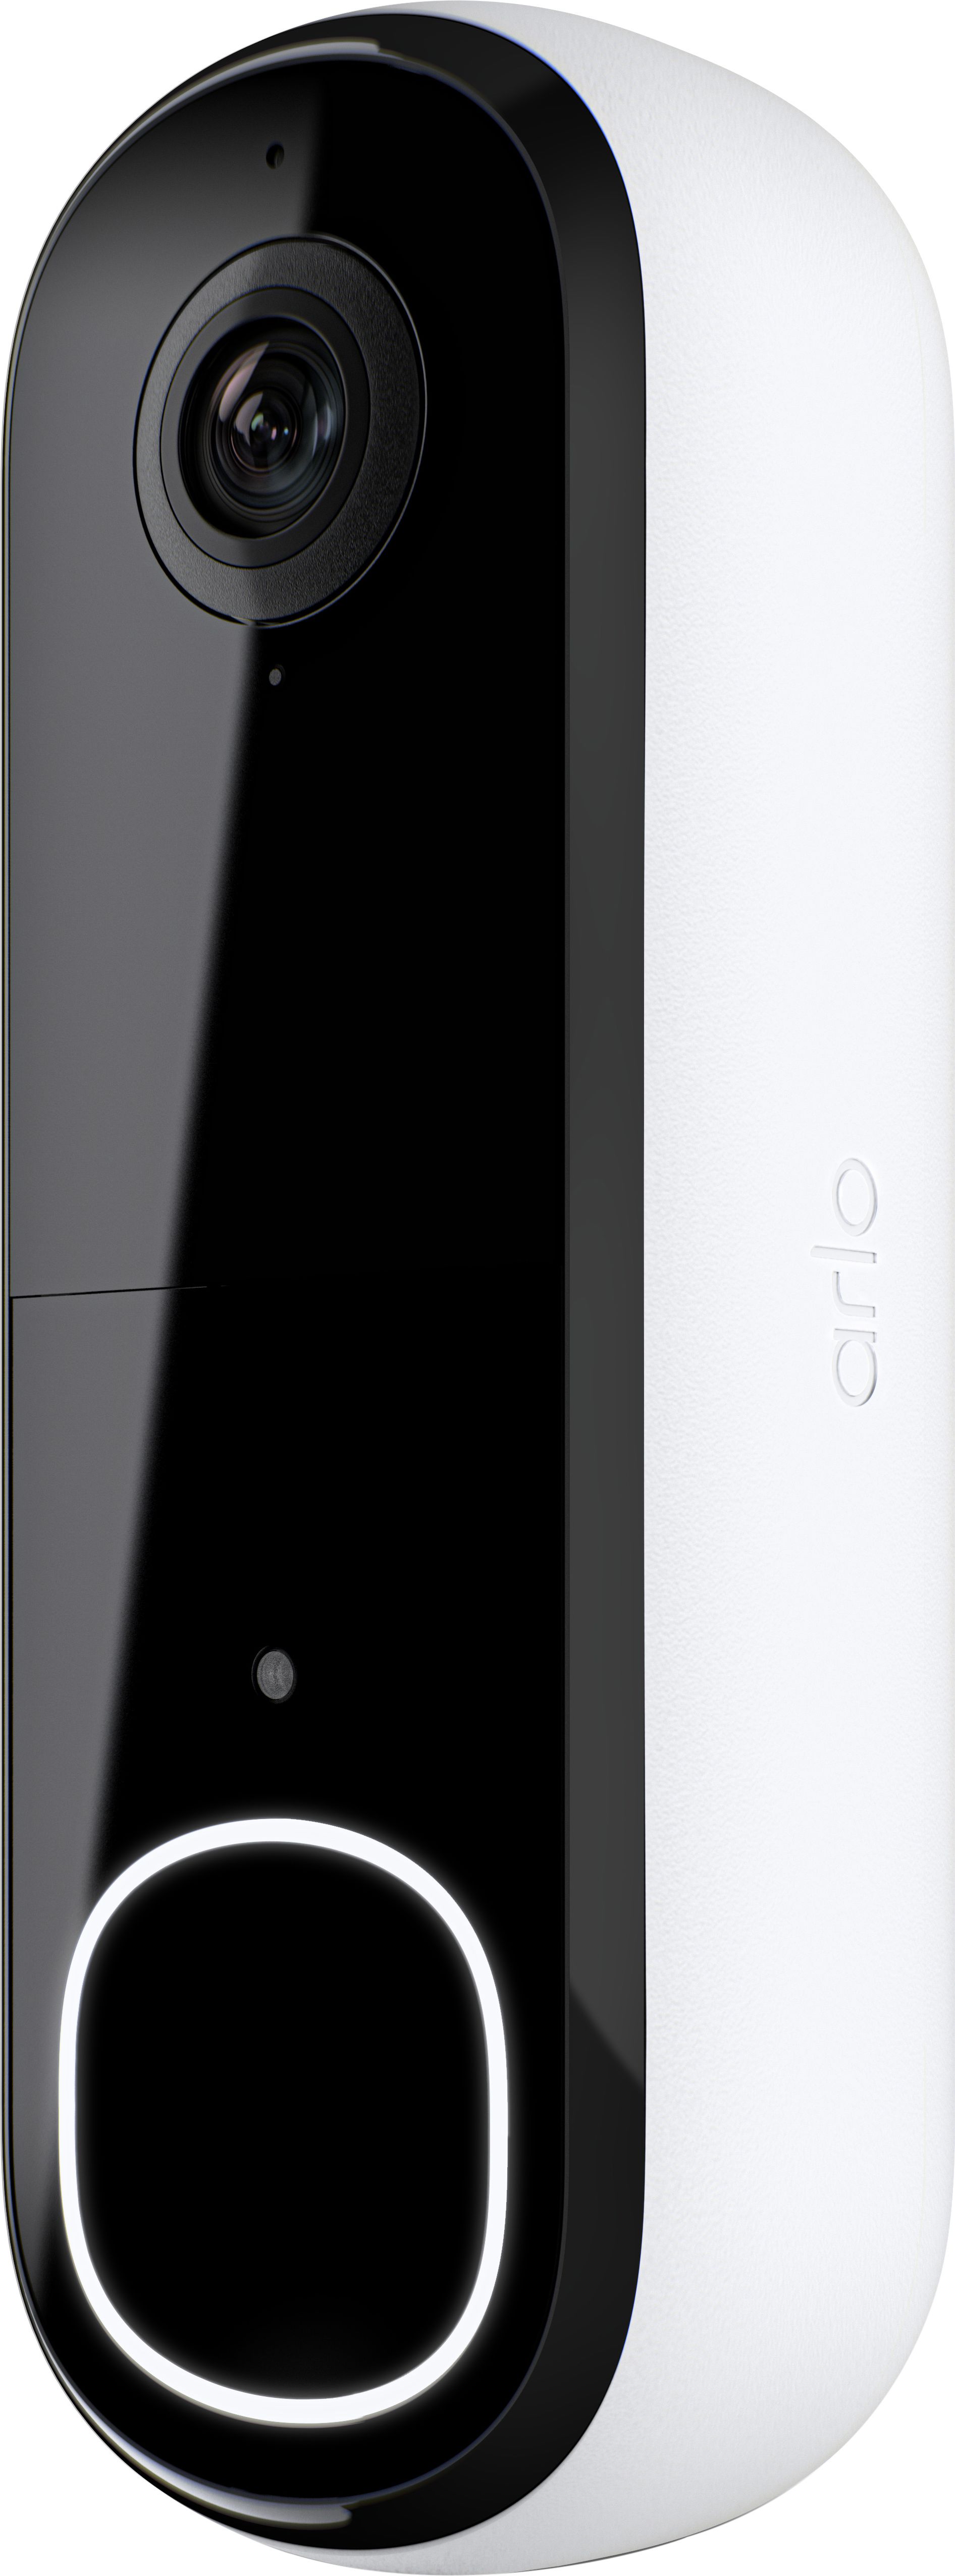 Arlo Essential2 2k Video Doorbell Smart Doorbell Full HD 1080p - White, White